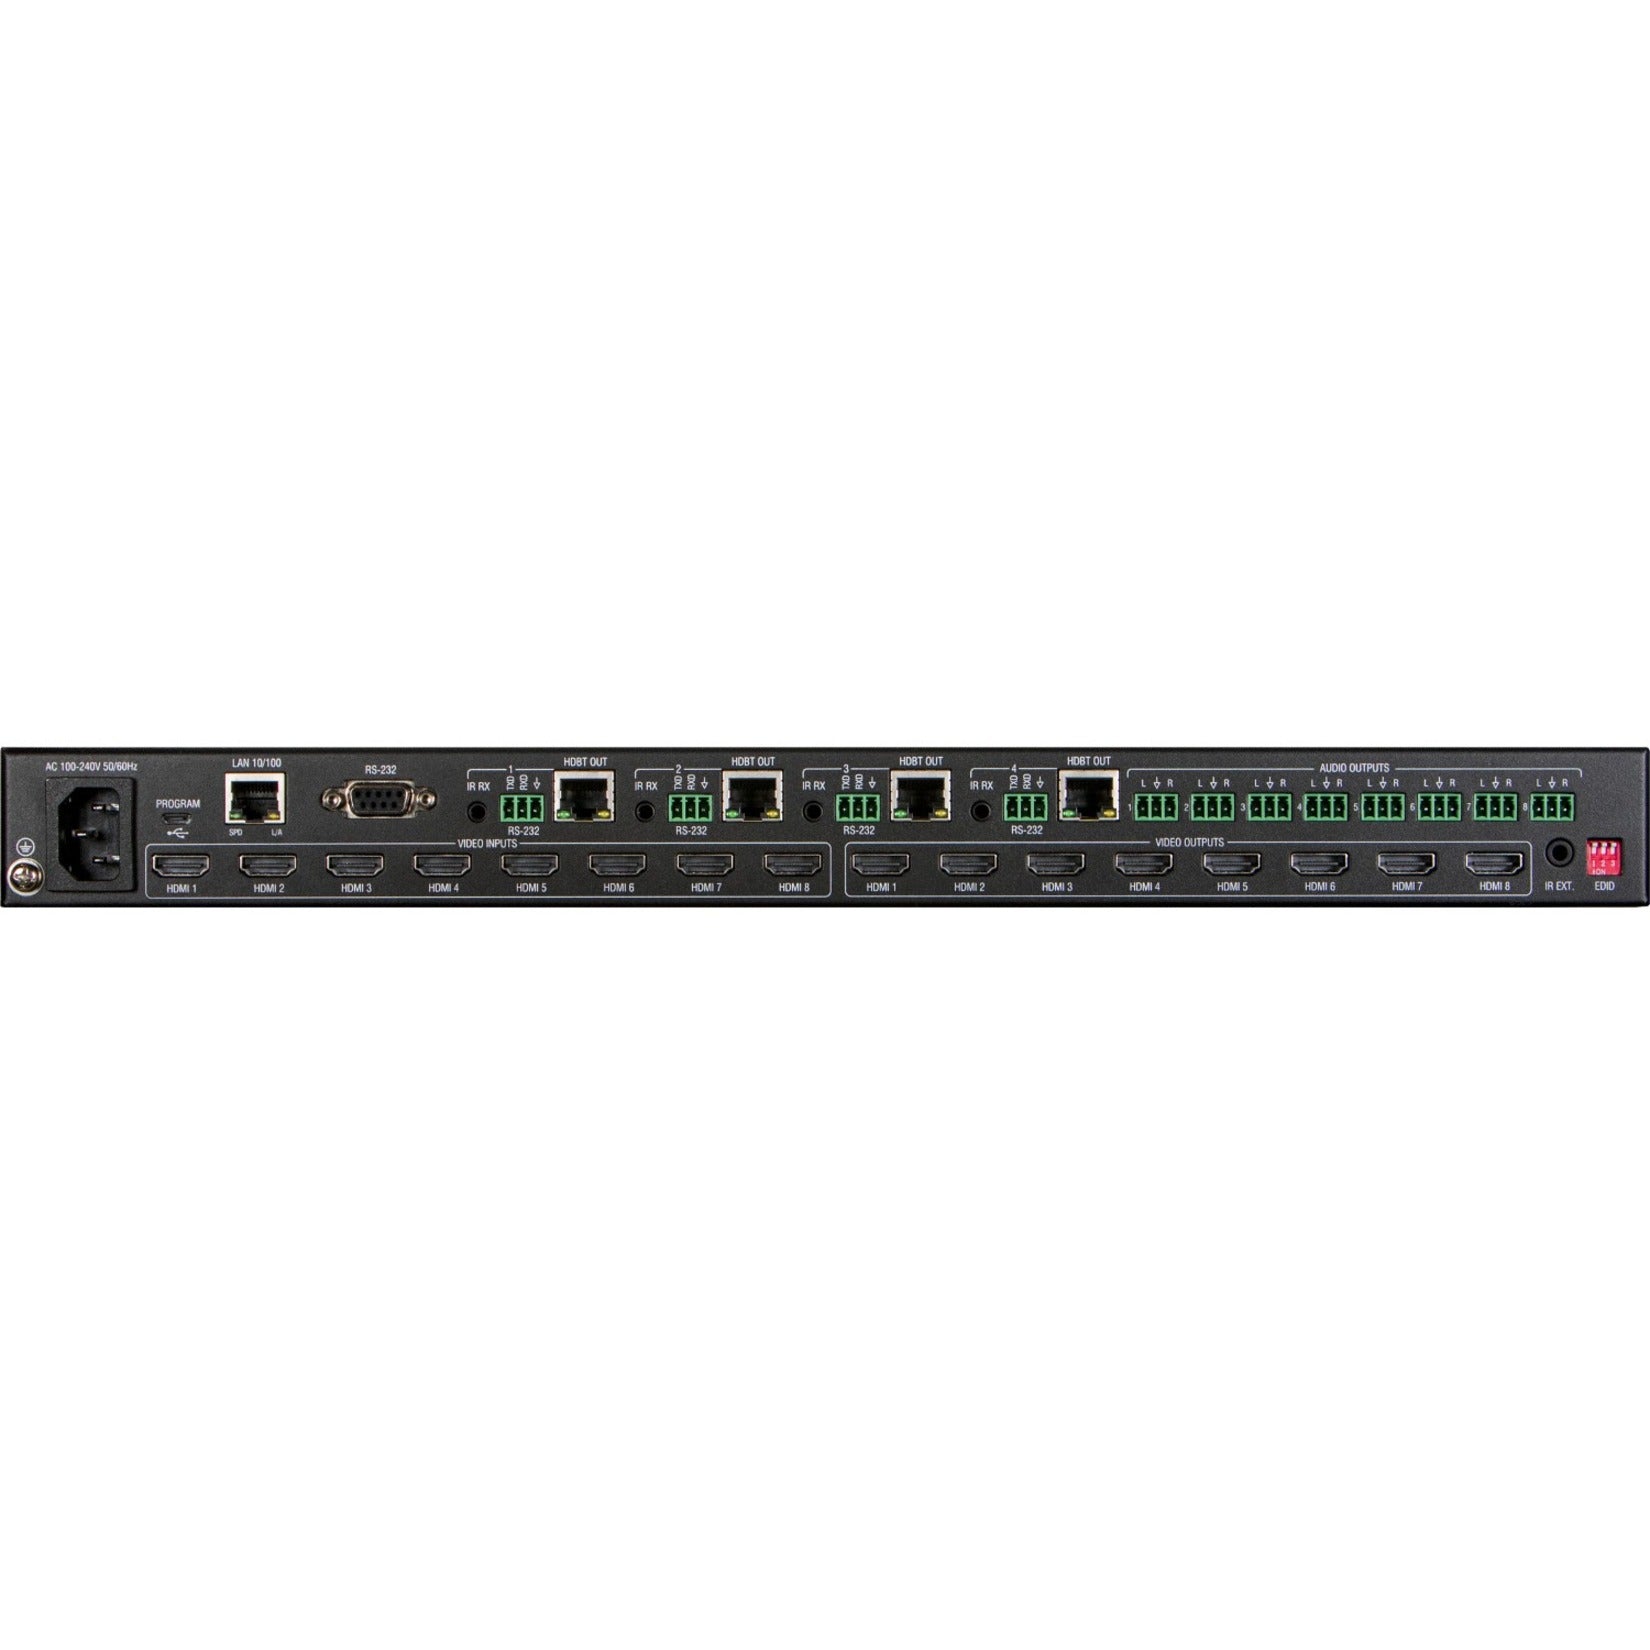 AMX FG1020-800 Precis 8x8+4 4K60 HDMI Matrix Switcher, Network RJ-45, 16 Inputs, 4 Outputs